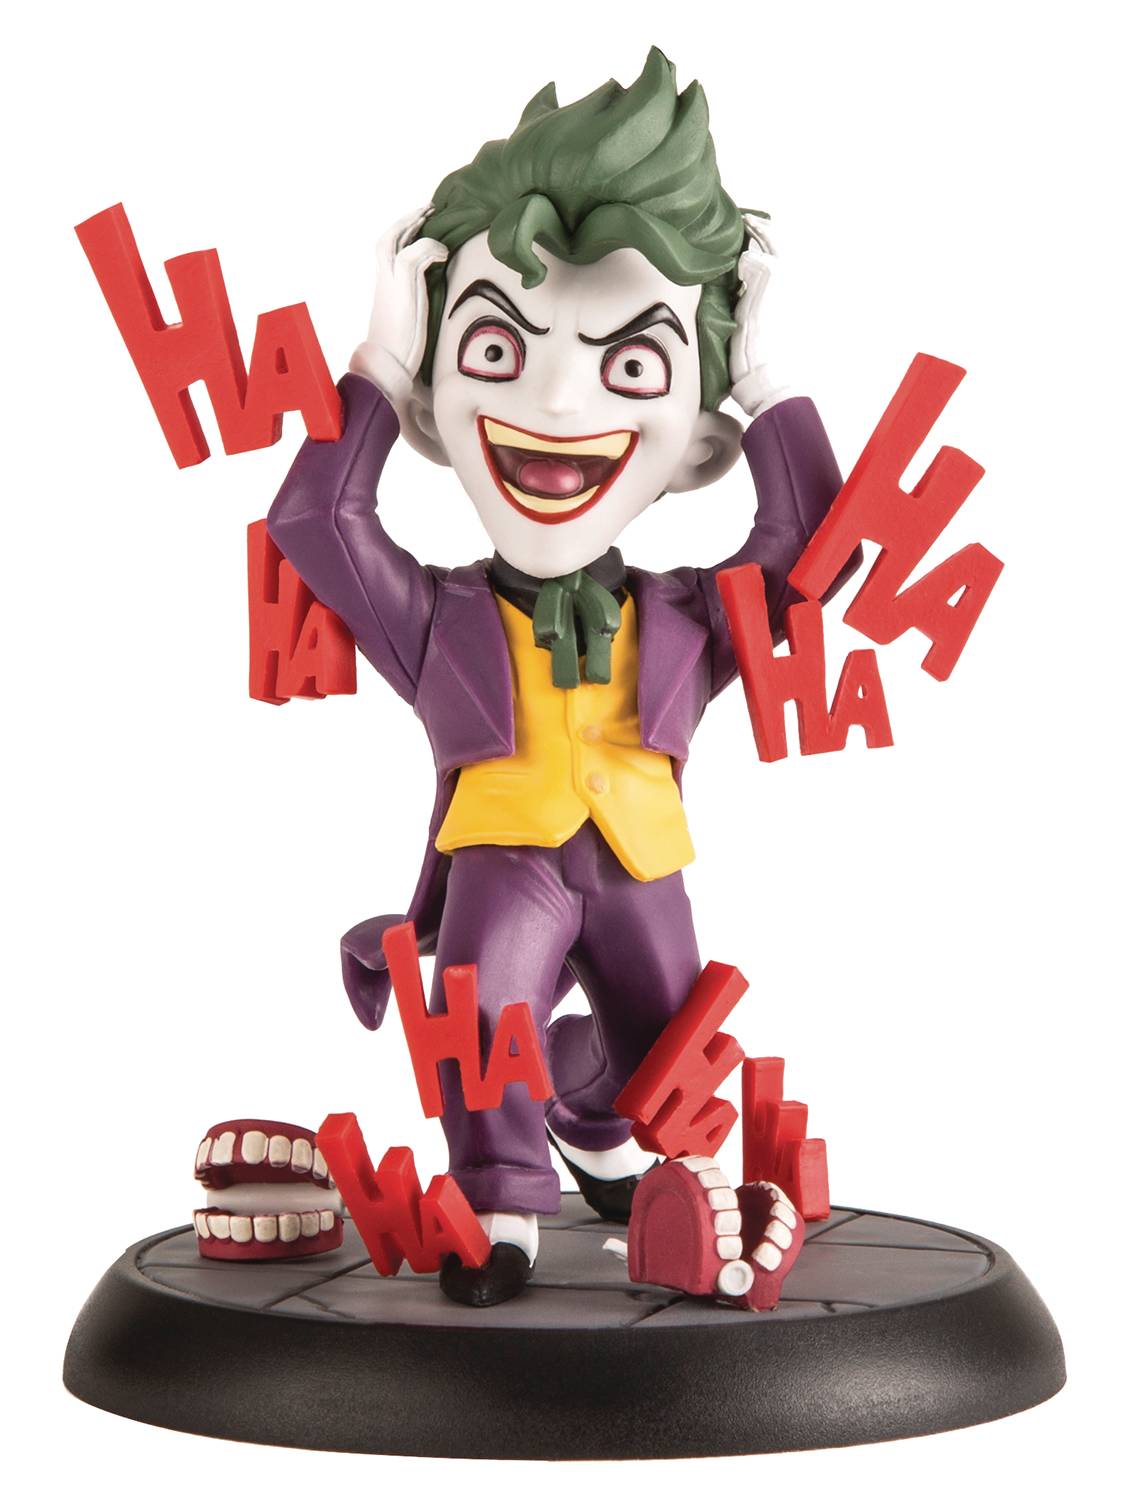 Killing Joke Joker Q-Fig Max Toons Figure